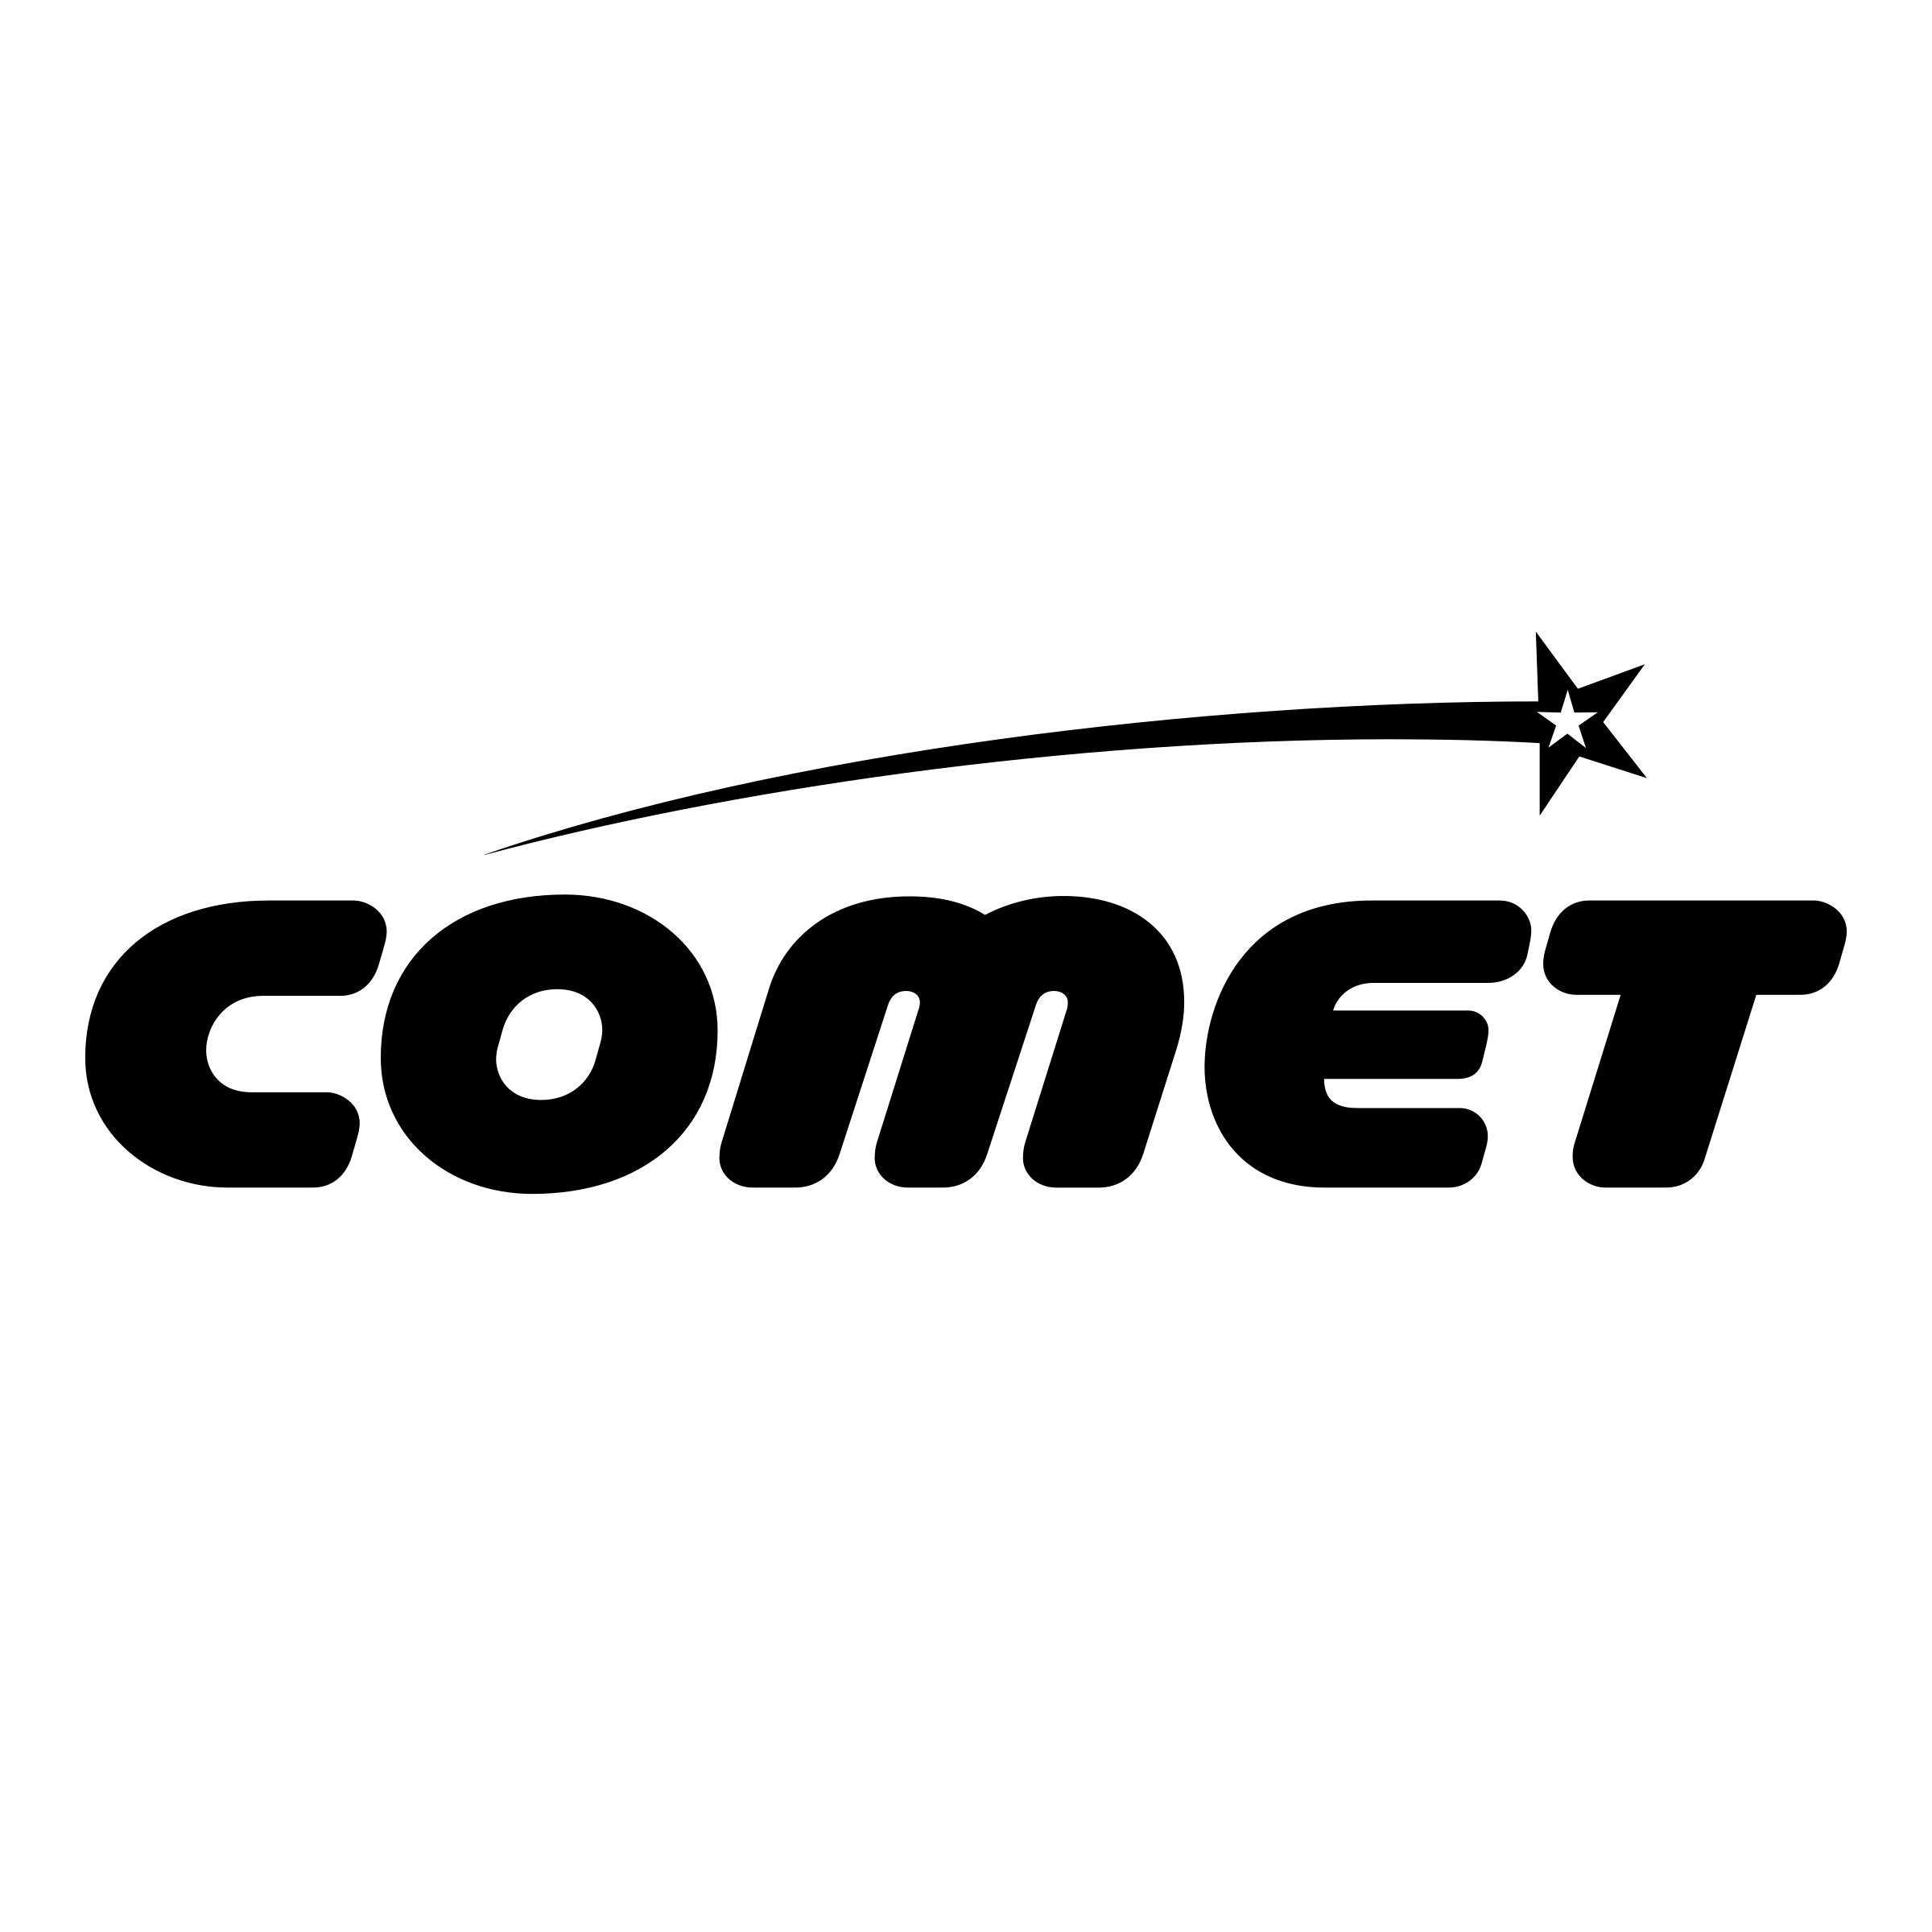 Comet Logo - Comet Logo PNG Transparent & SVG Vector